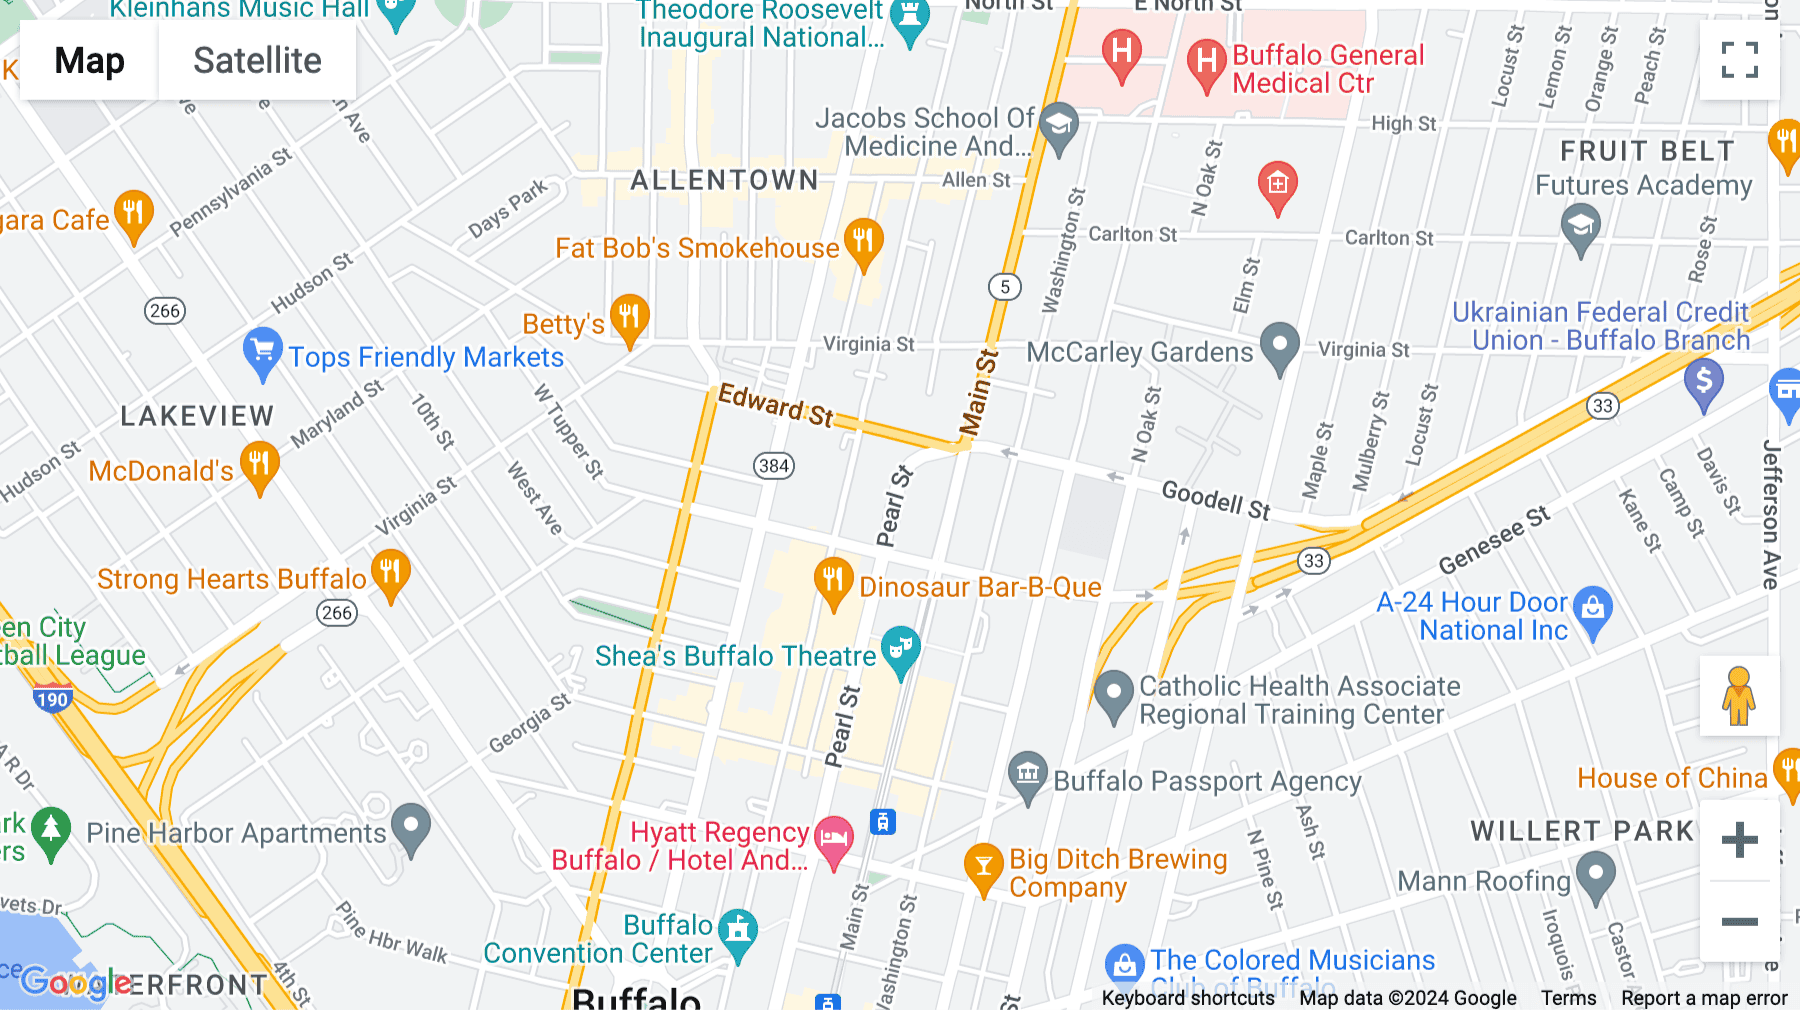 Click for interative map of 70 Niagara Street, Buffalo, New York State, Buffalo